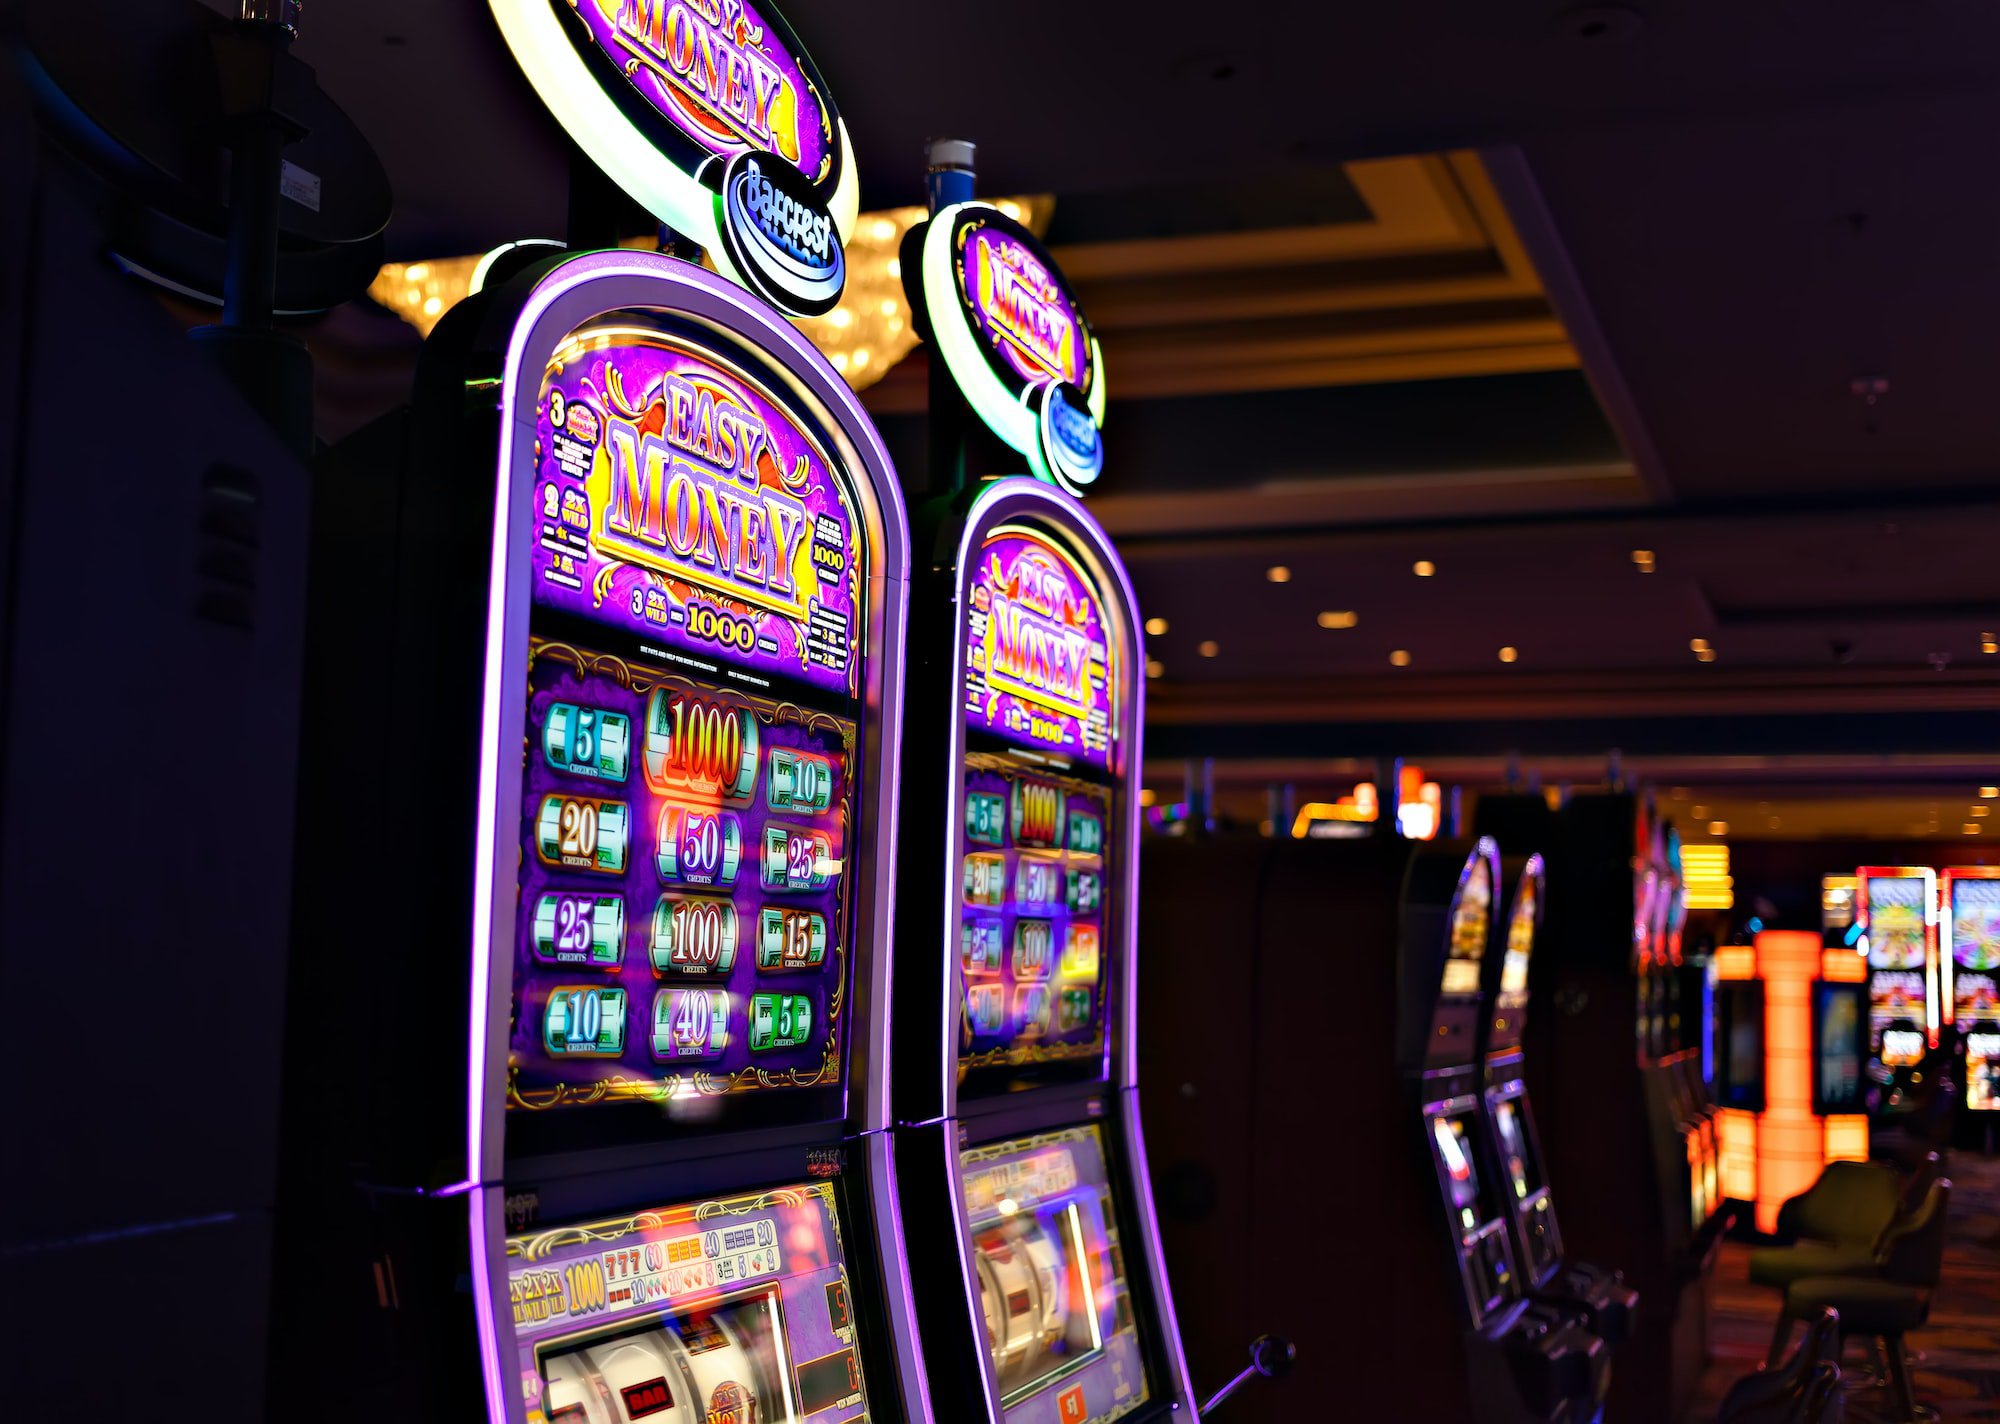 Casino (Cassatie) Royale: over informaticabedrog via ‘gokterminals’